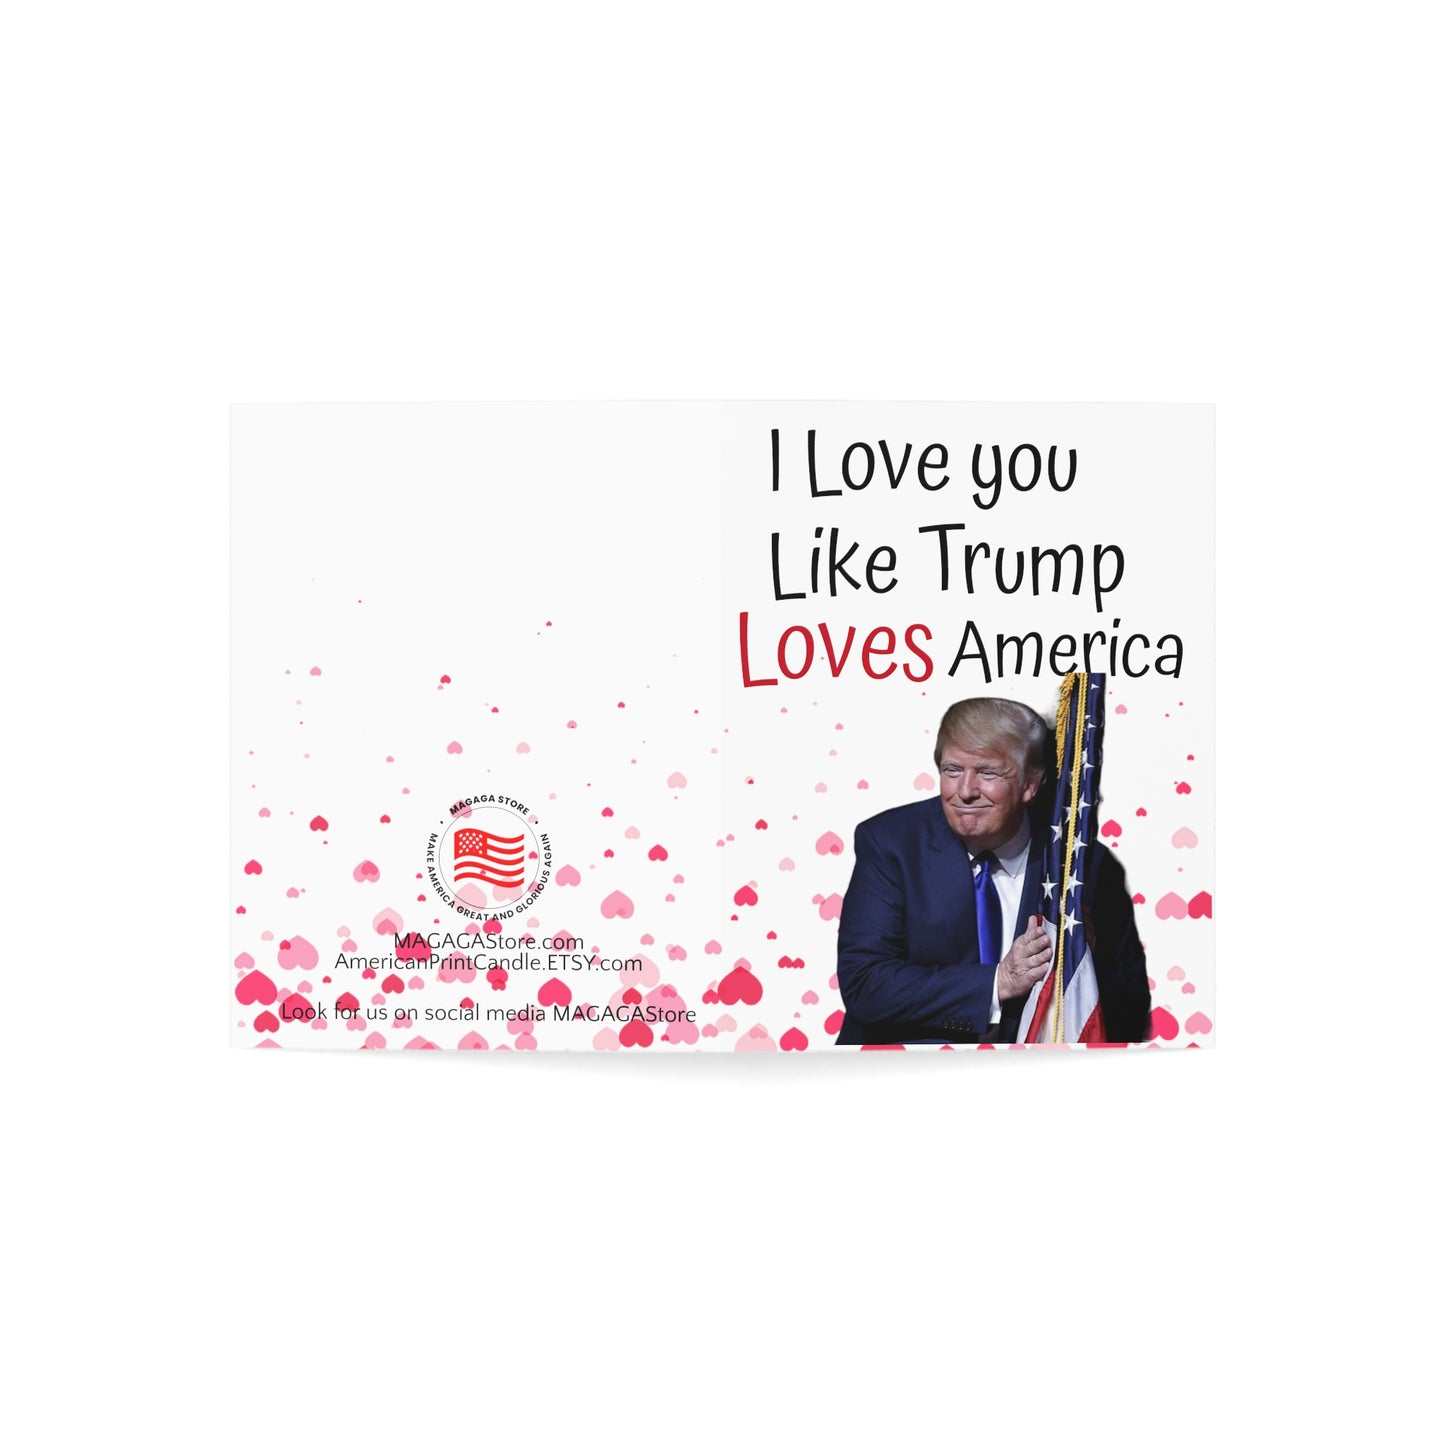 Ich liebe dich, wie Trump Amerika liebt, Jubiläums- oder Muttertagskarte